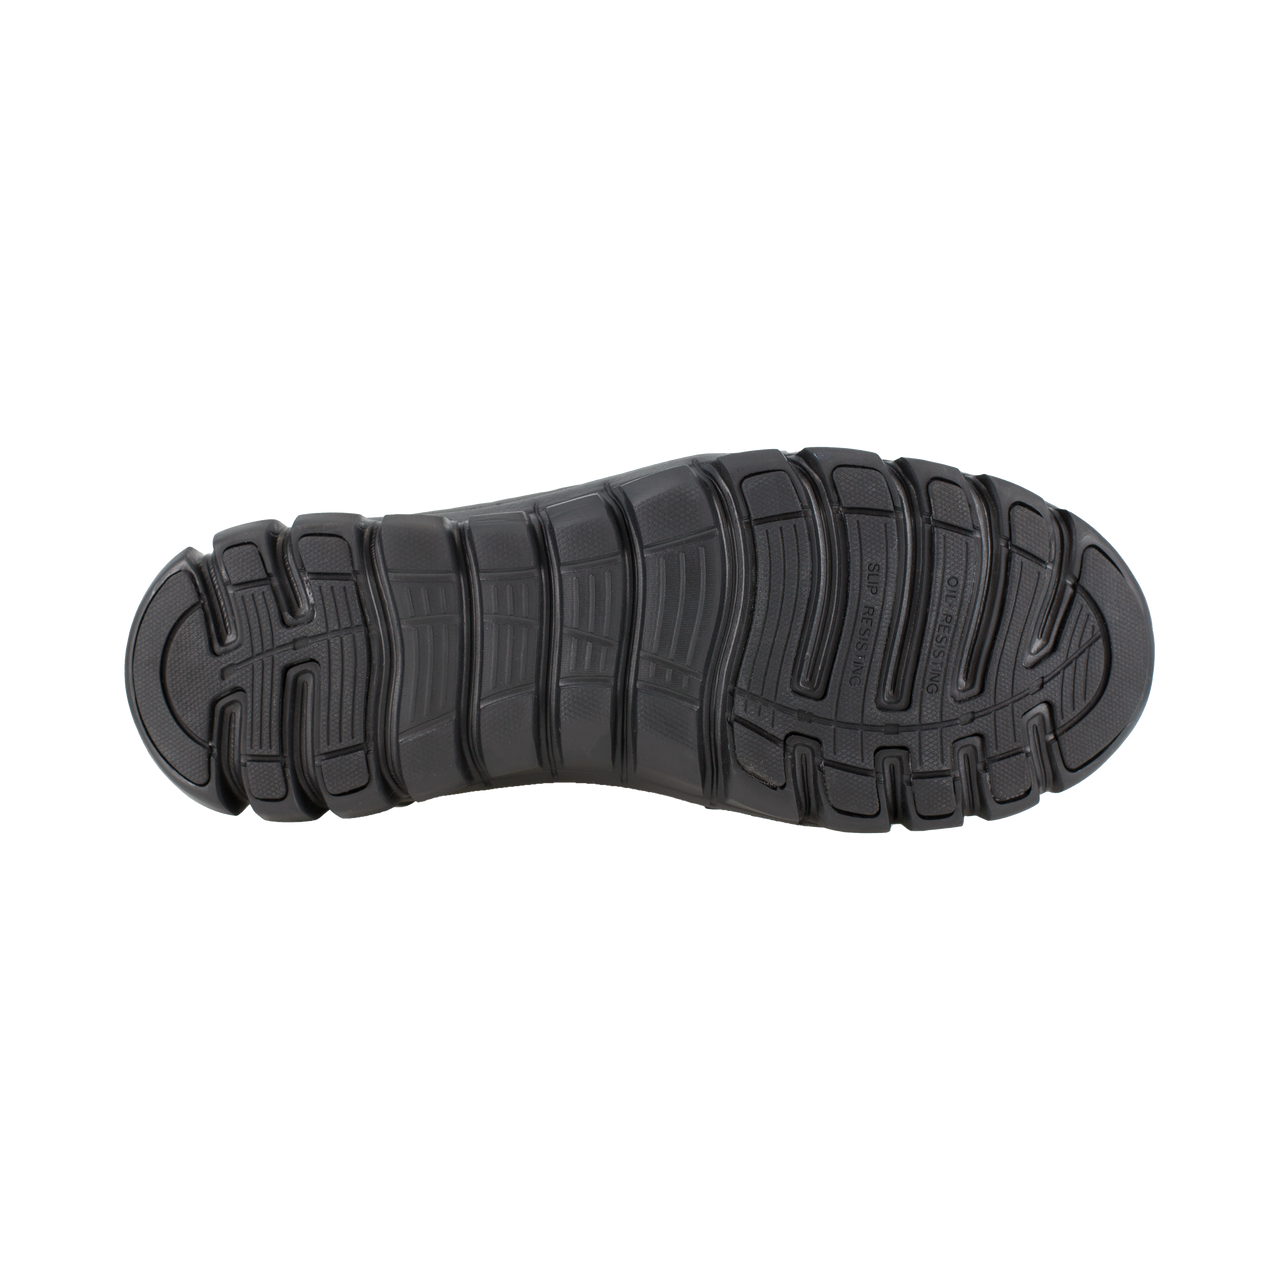 Reebok Sublite Cushion Athletic Composite Toe Work Shoe RB4039 - Black - Men